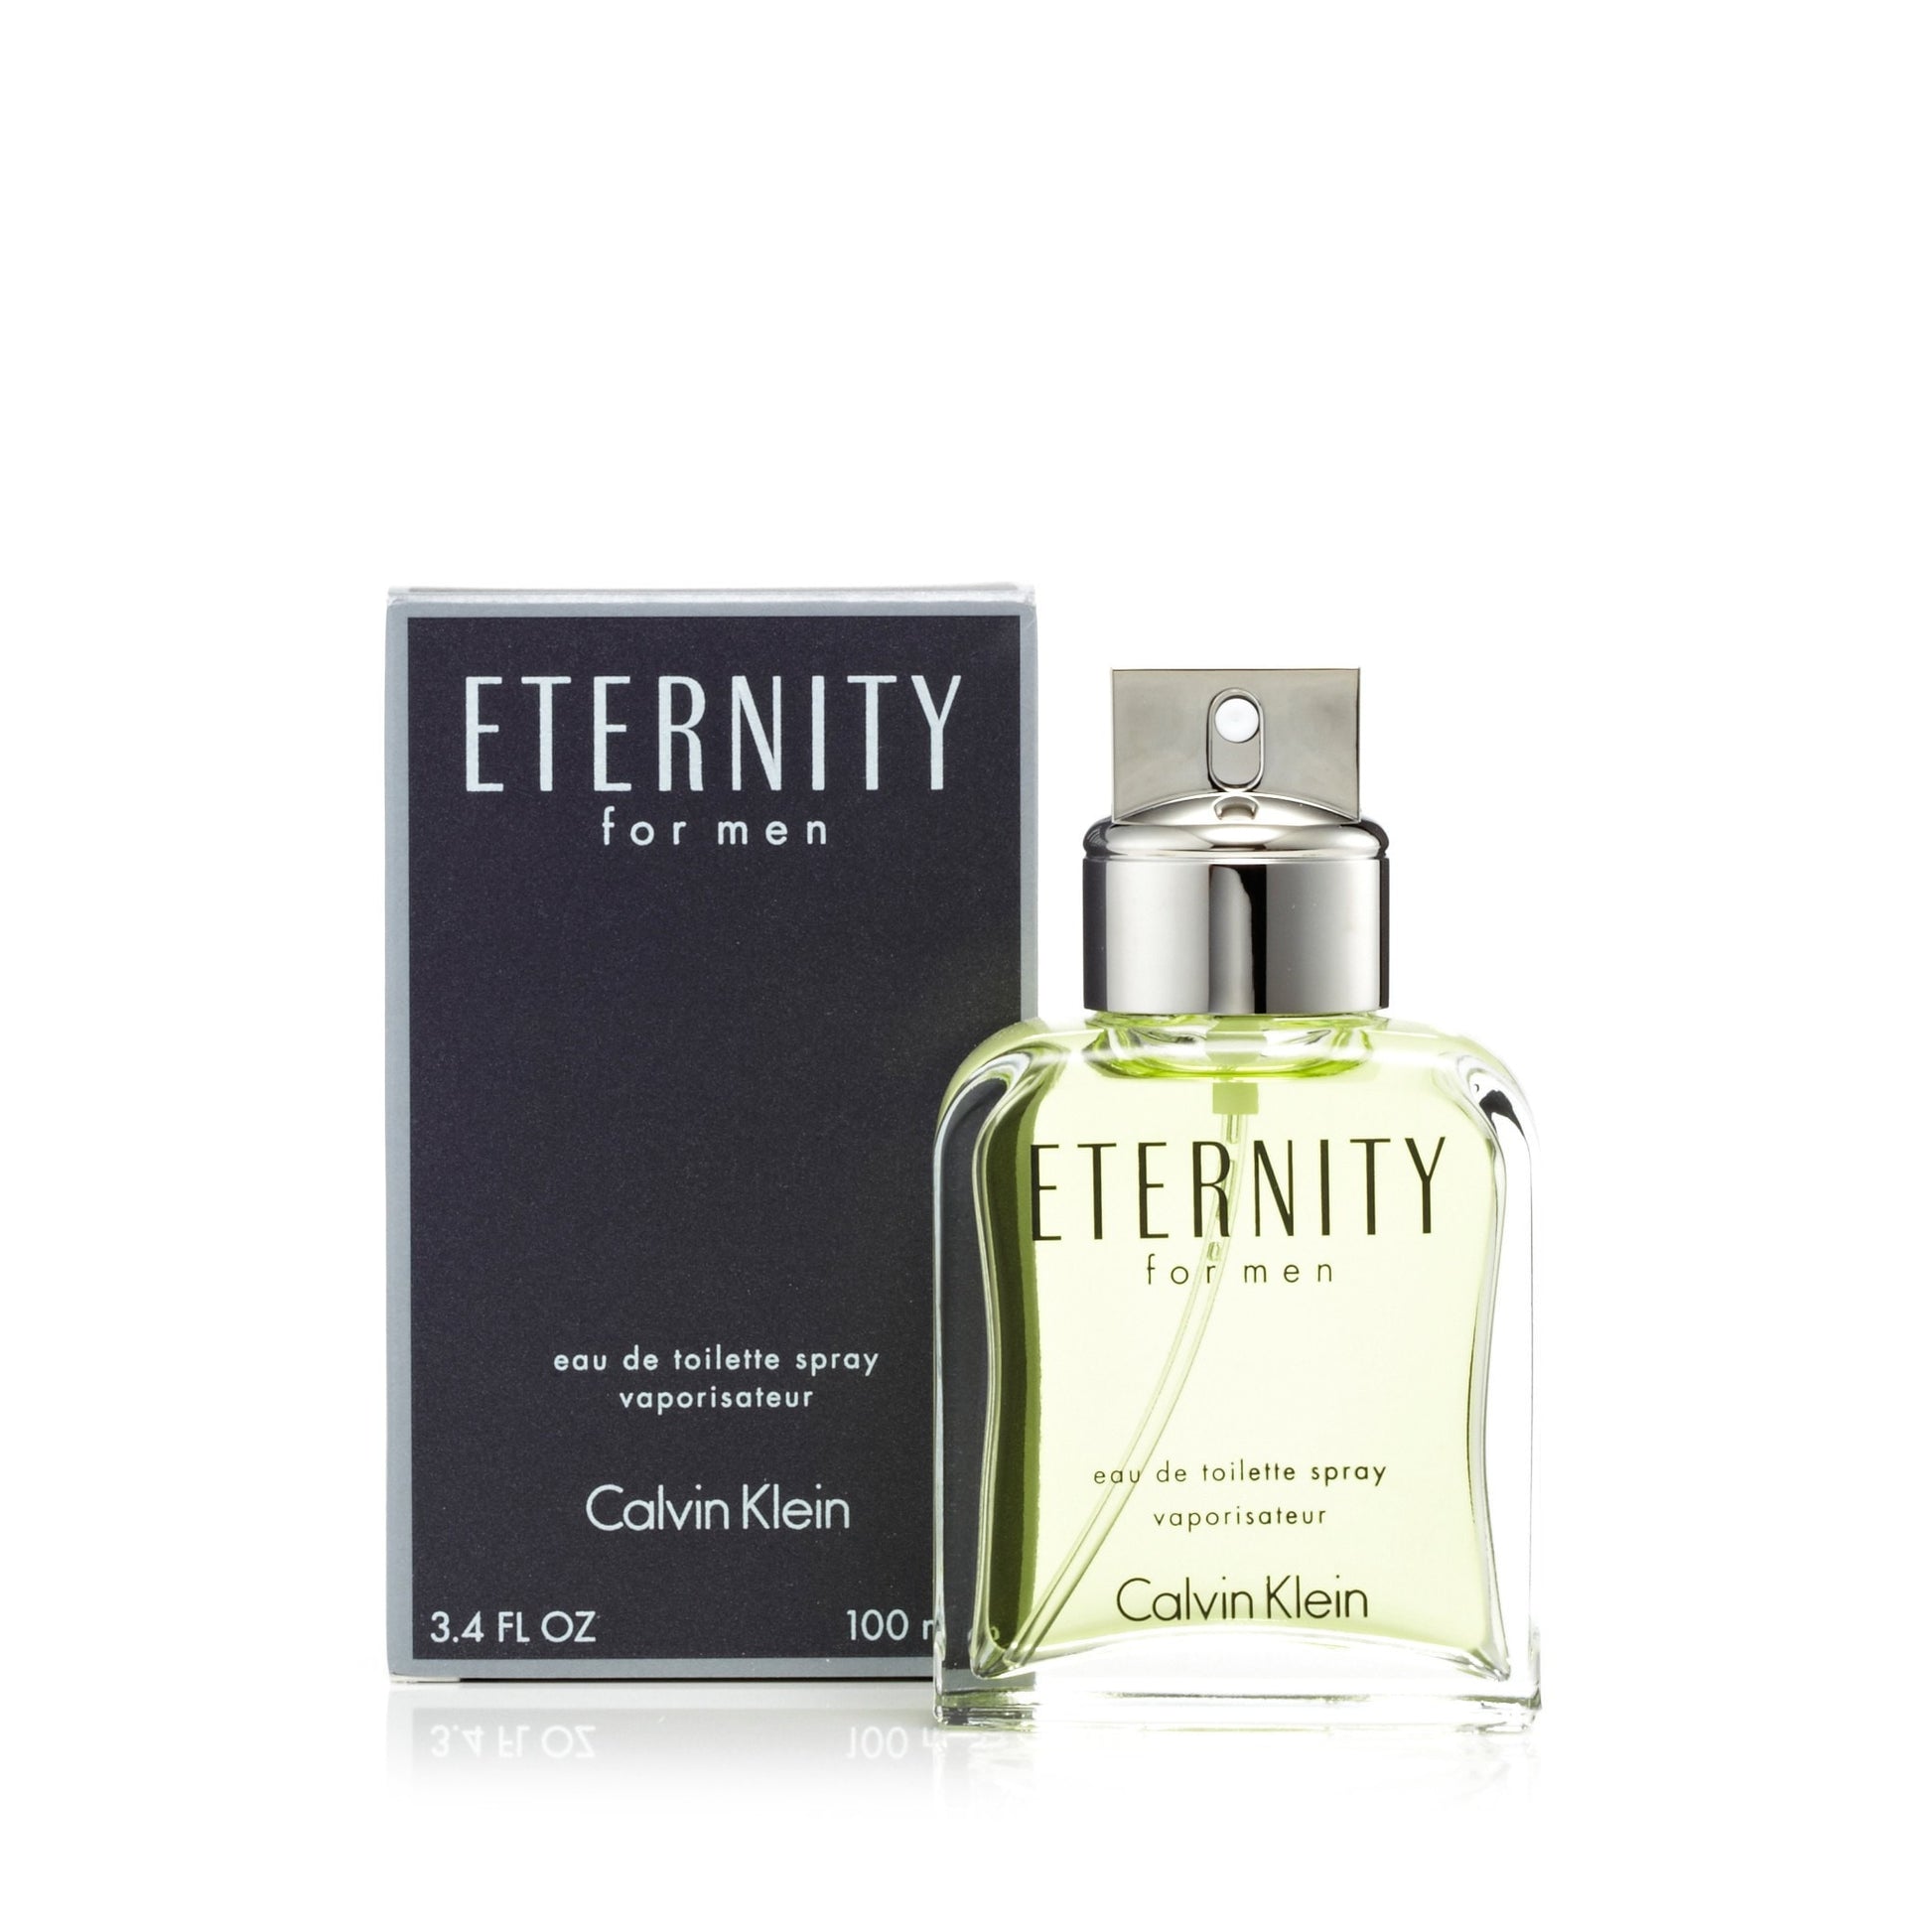 Eternity Eau de Toilette Spray for Men by Calvin Klein 3.4 oz. Click to open in modal